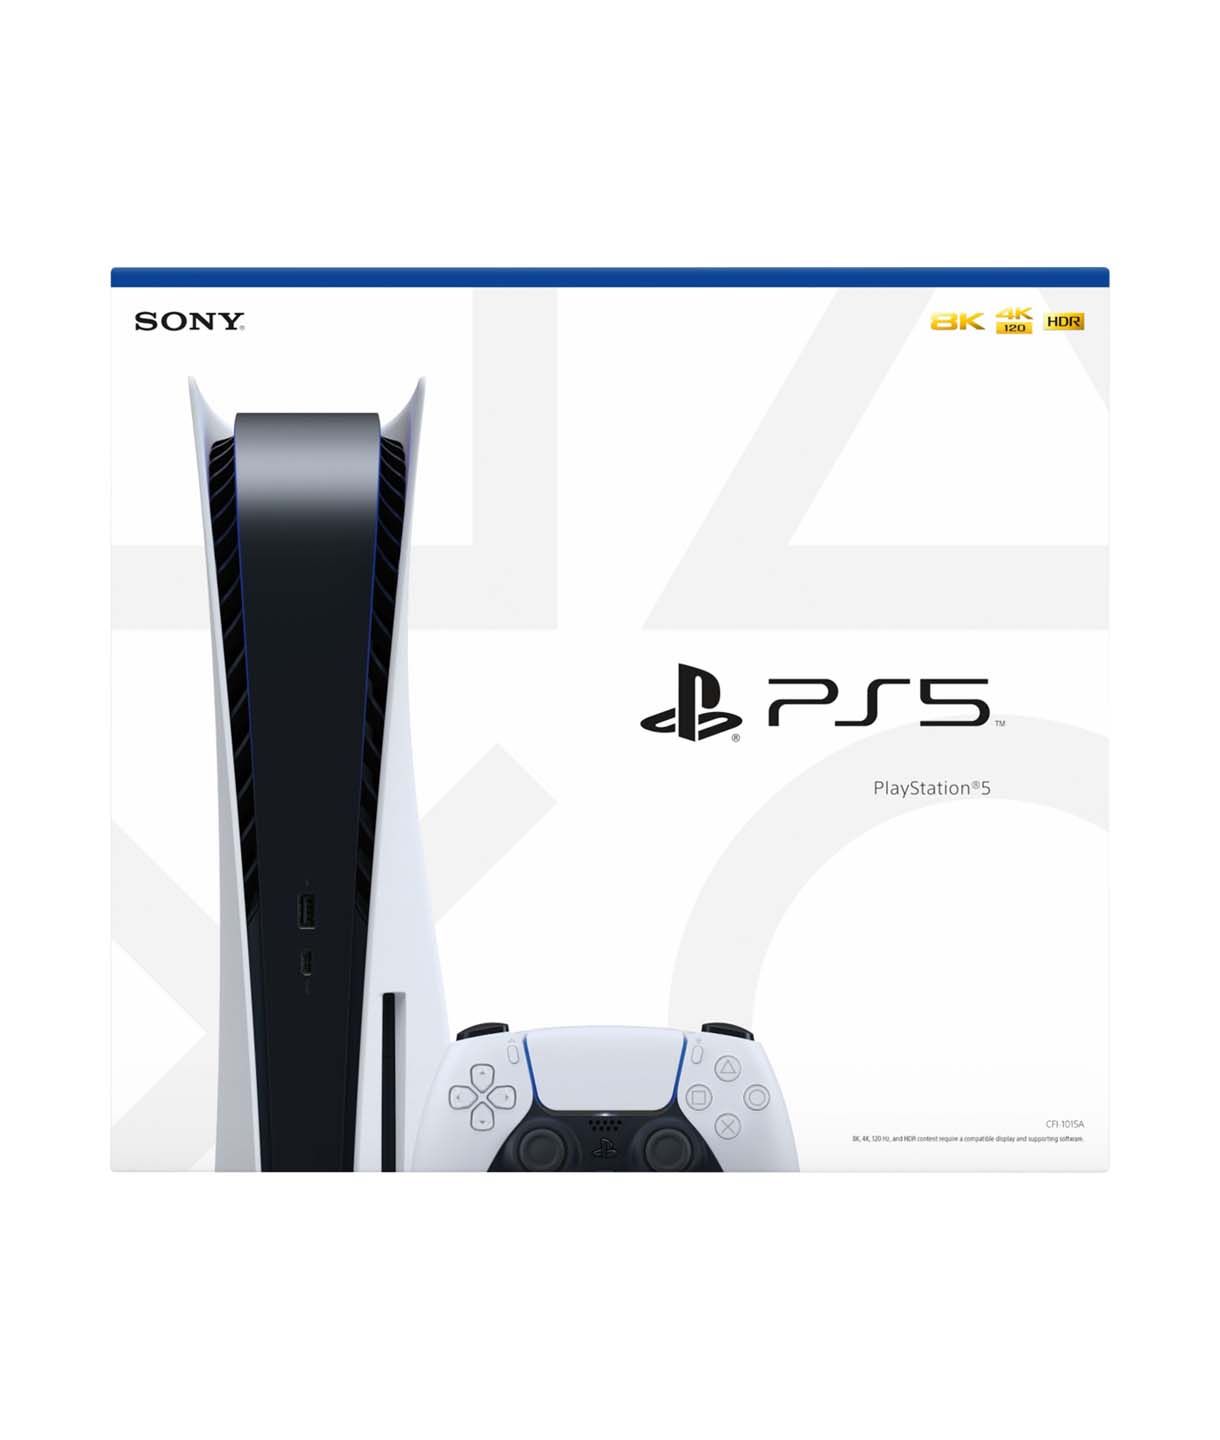 Sony PS5 Standard Edition | CFI-1200A01 - Japan